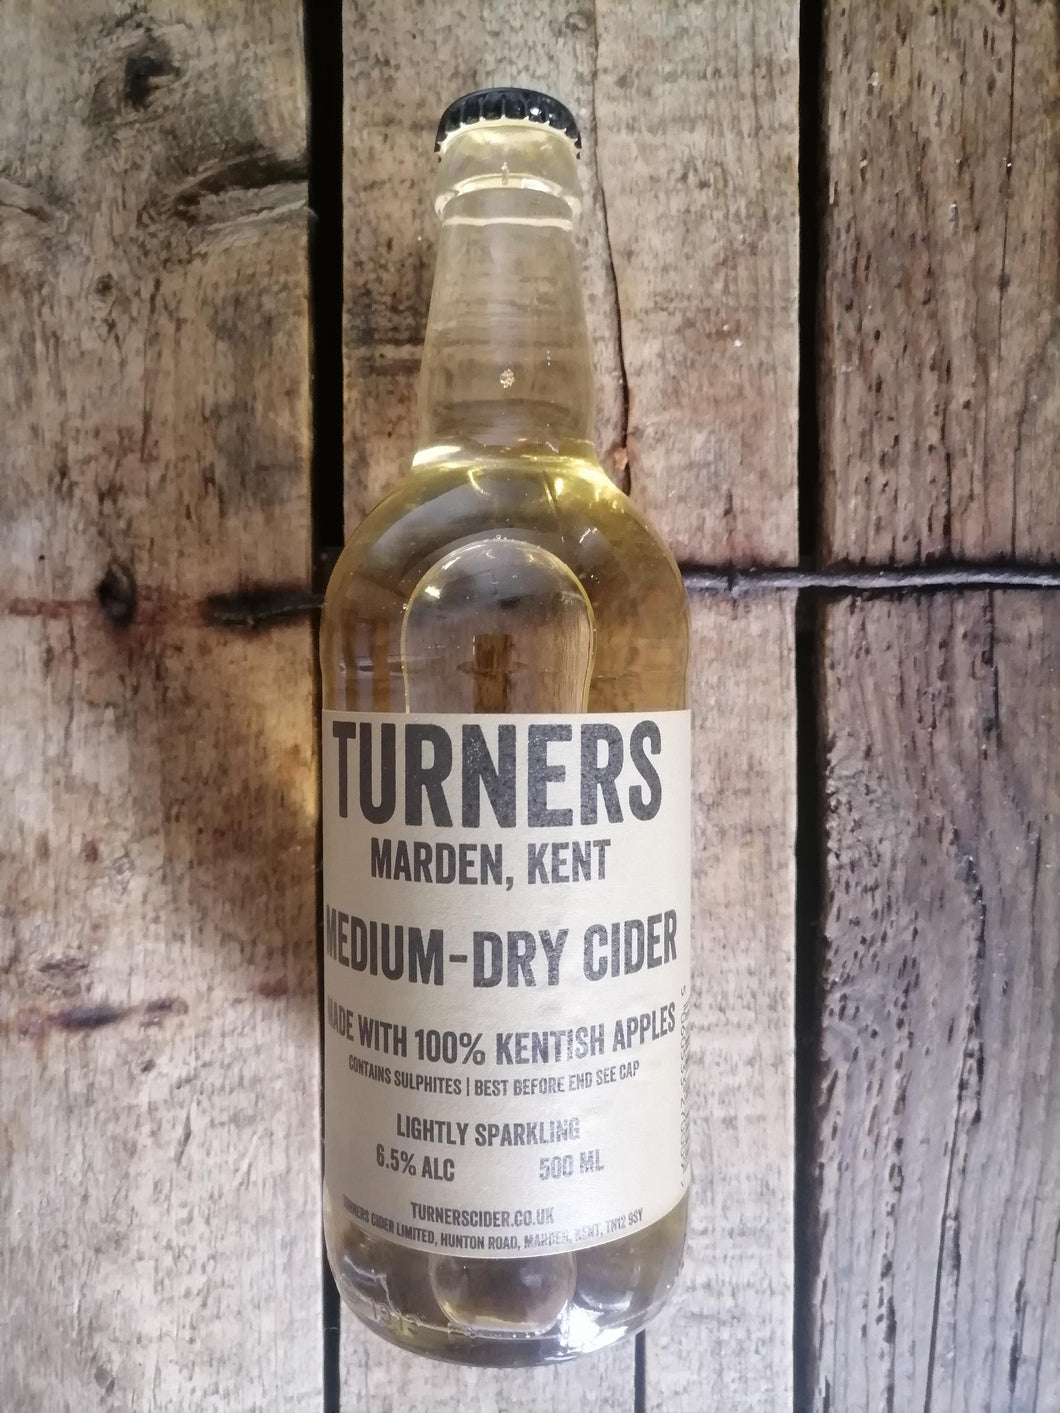 Turners Medium Dry Cider 6.5% (500ml bottle)